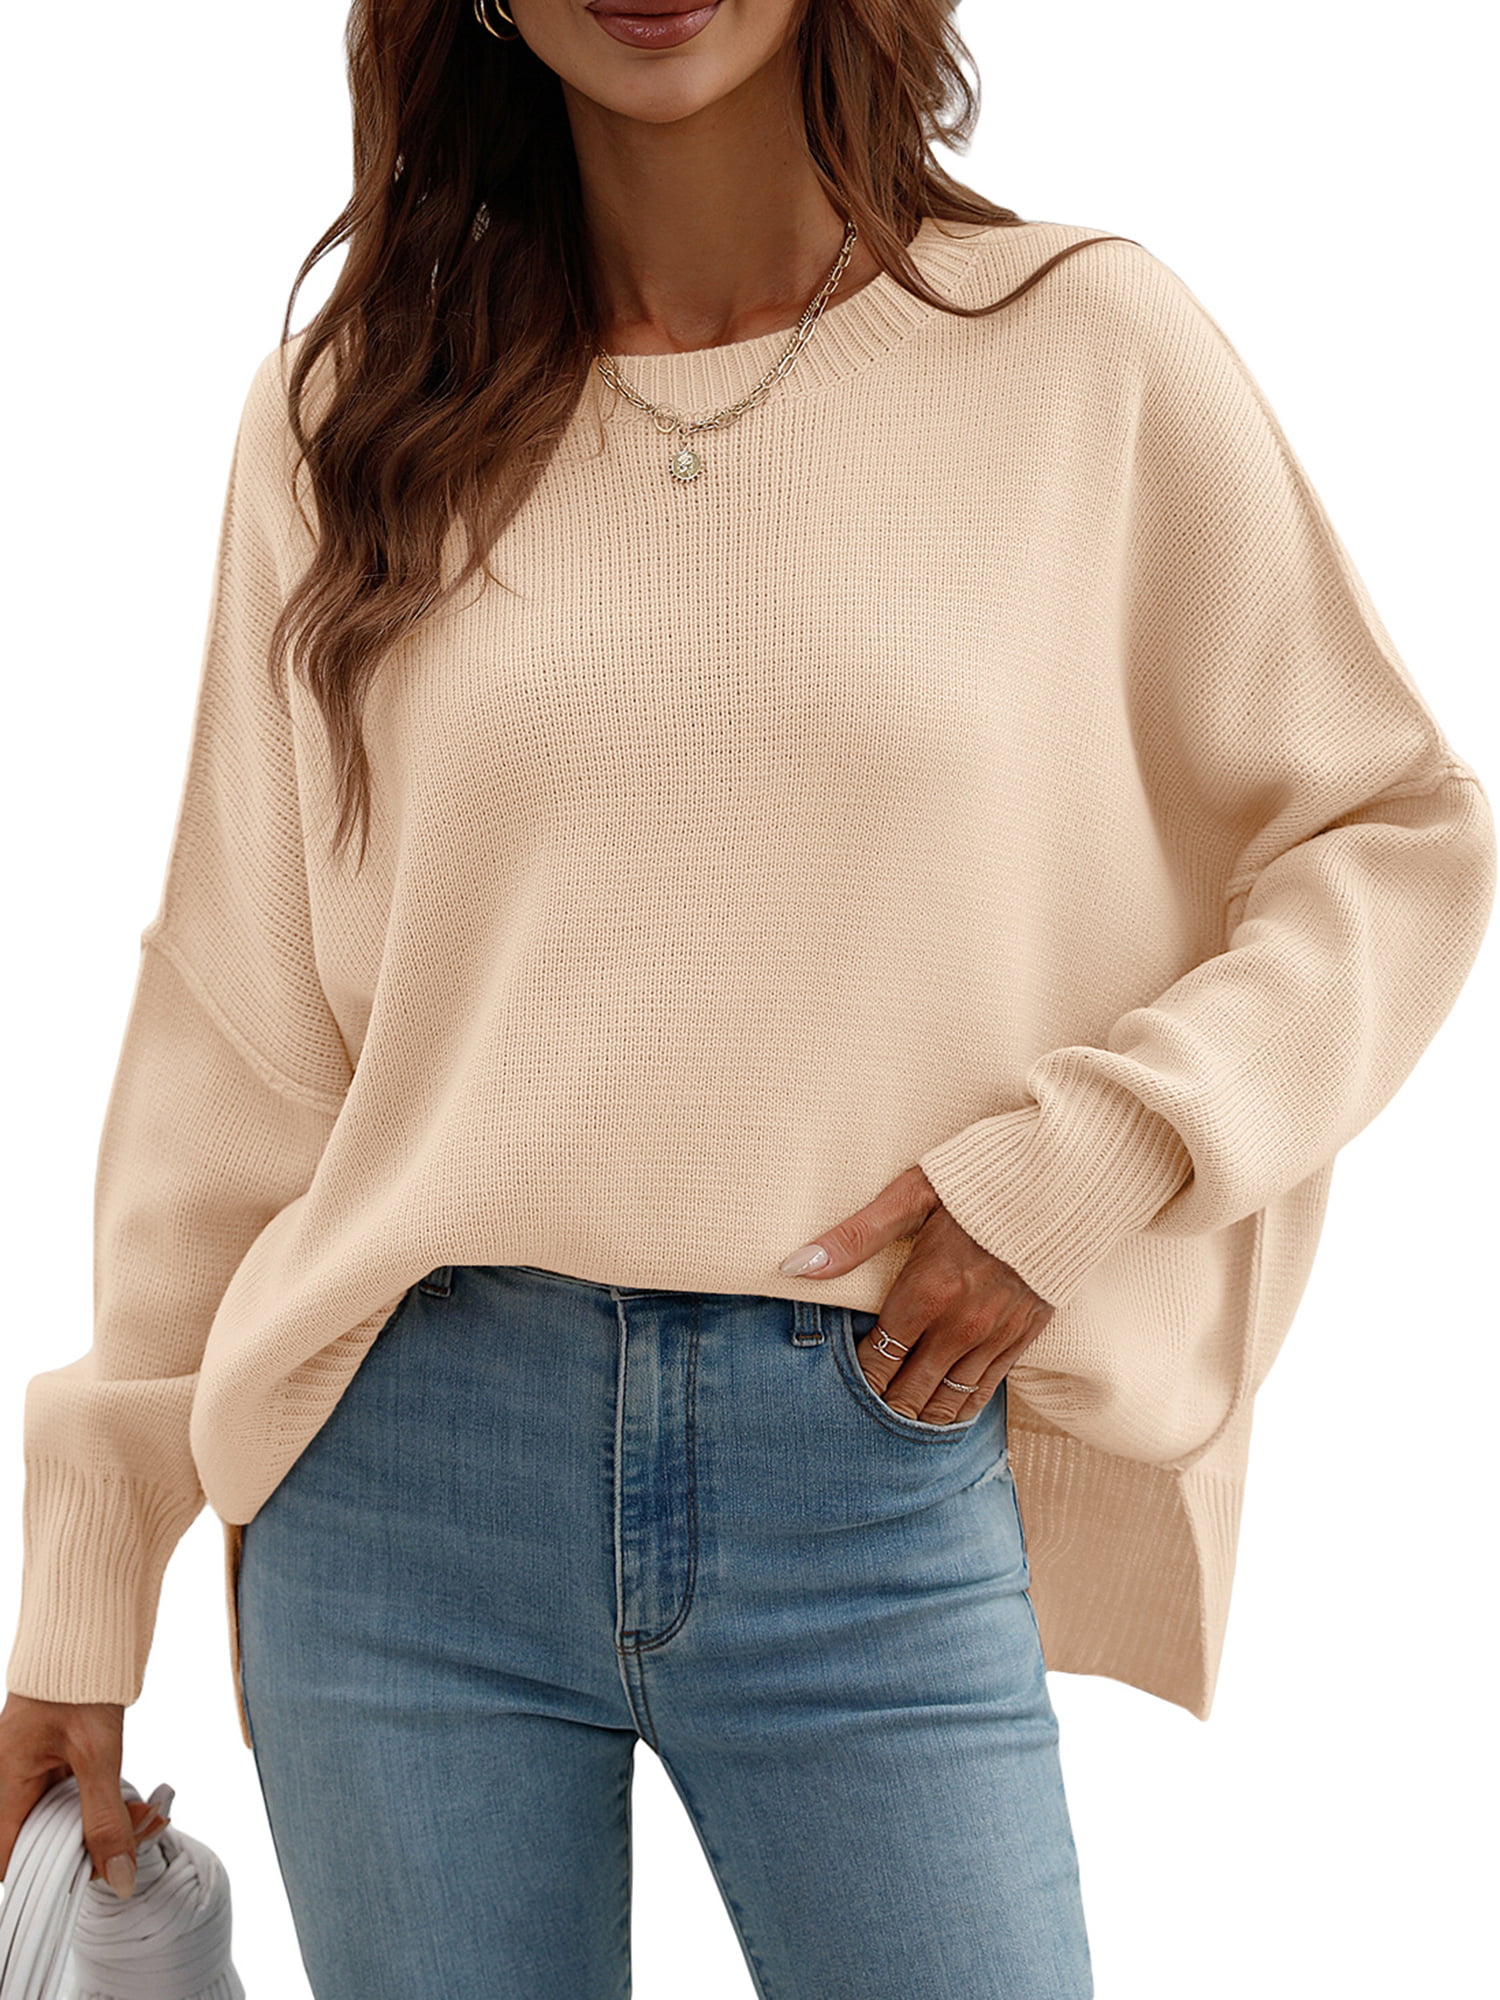 Gwiyeopda Women Elegant Sweaters Solid Long Sleeve Round Neck Knit Pullovers Jumper Tops - Walmart.com